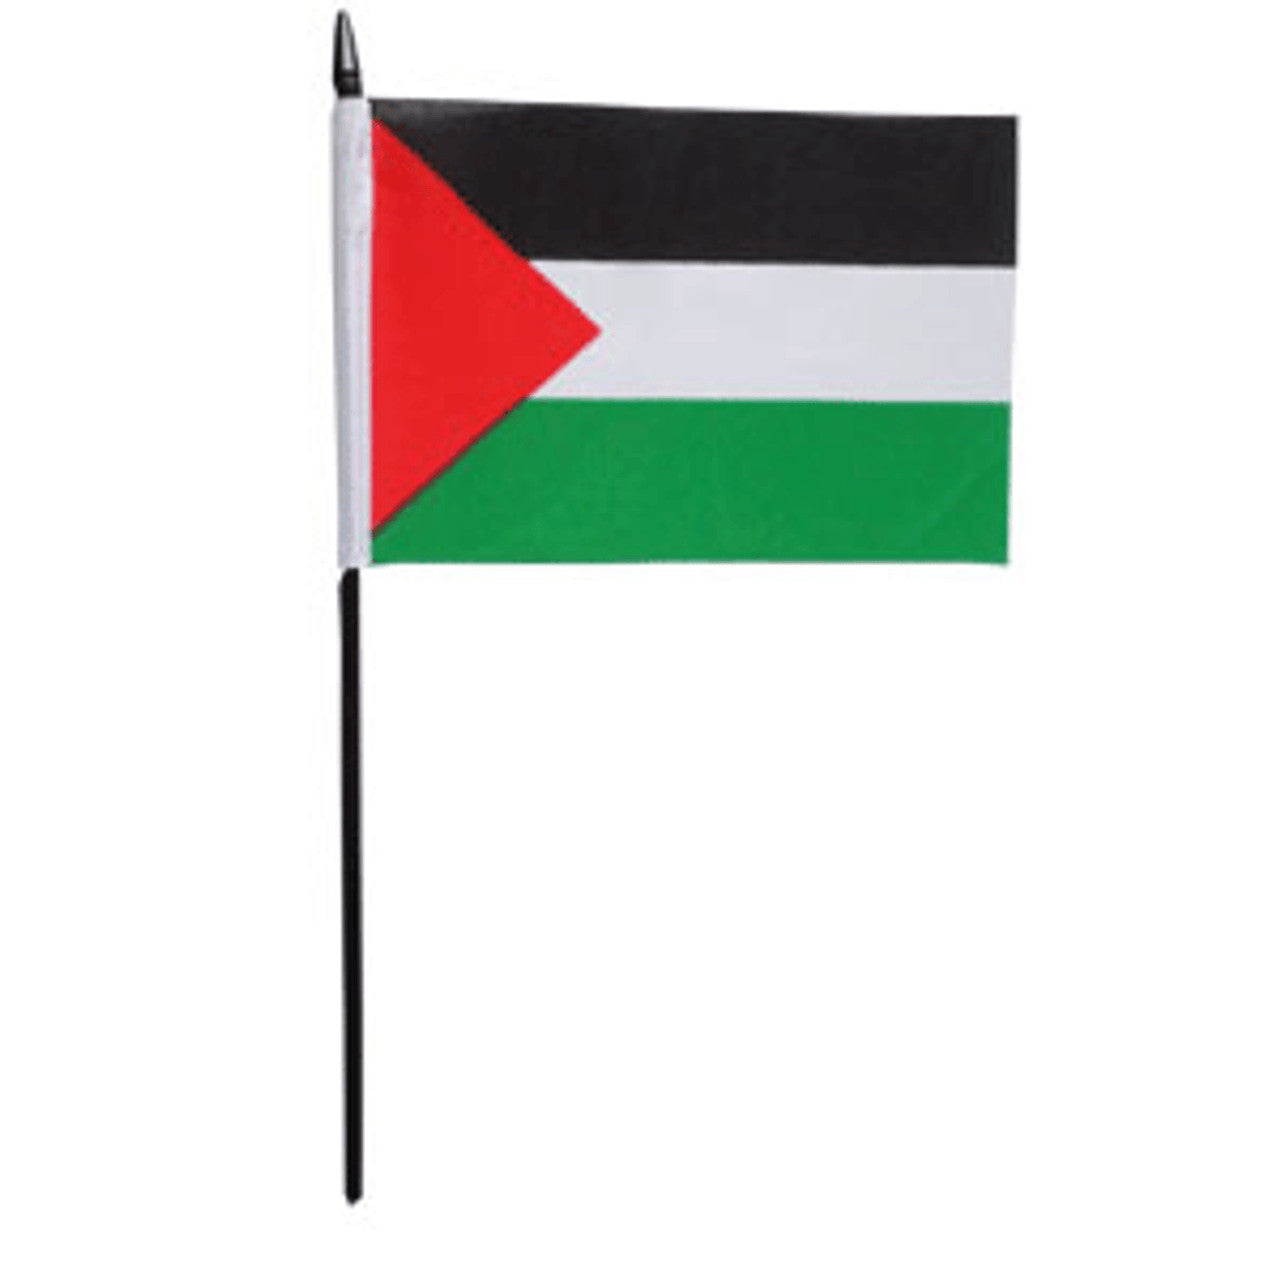 Palestine Hand Waving Flag